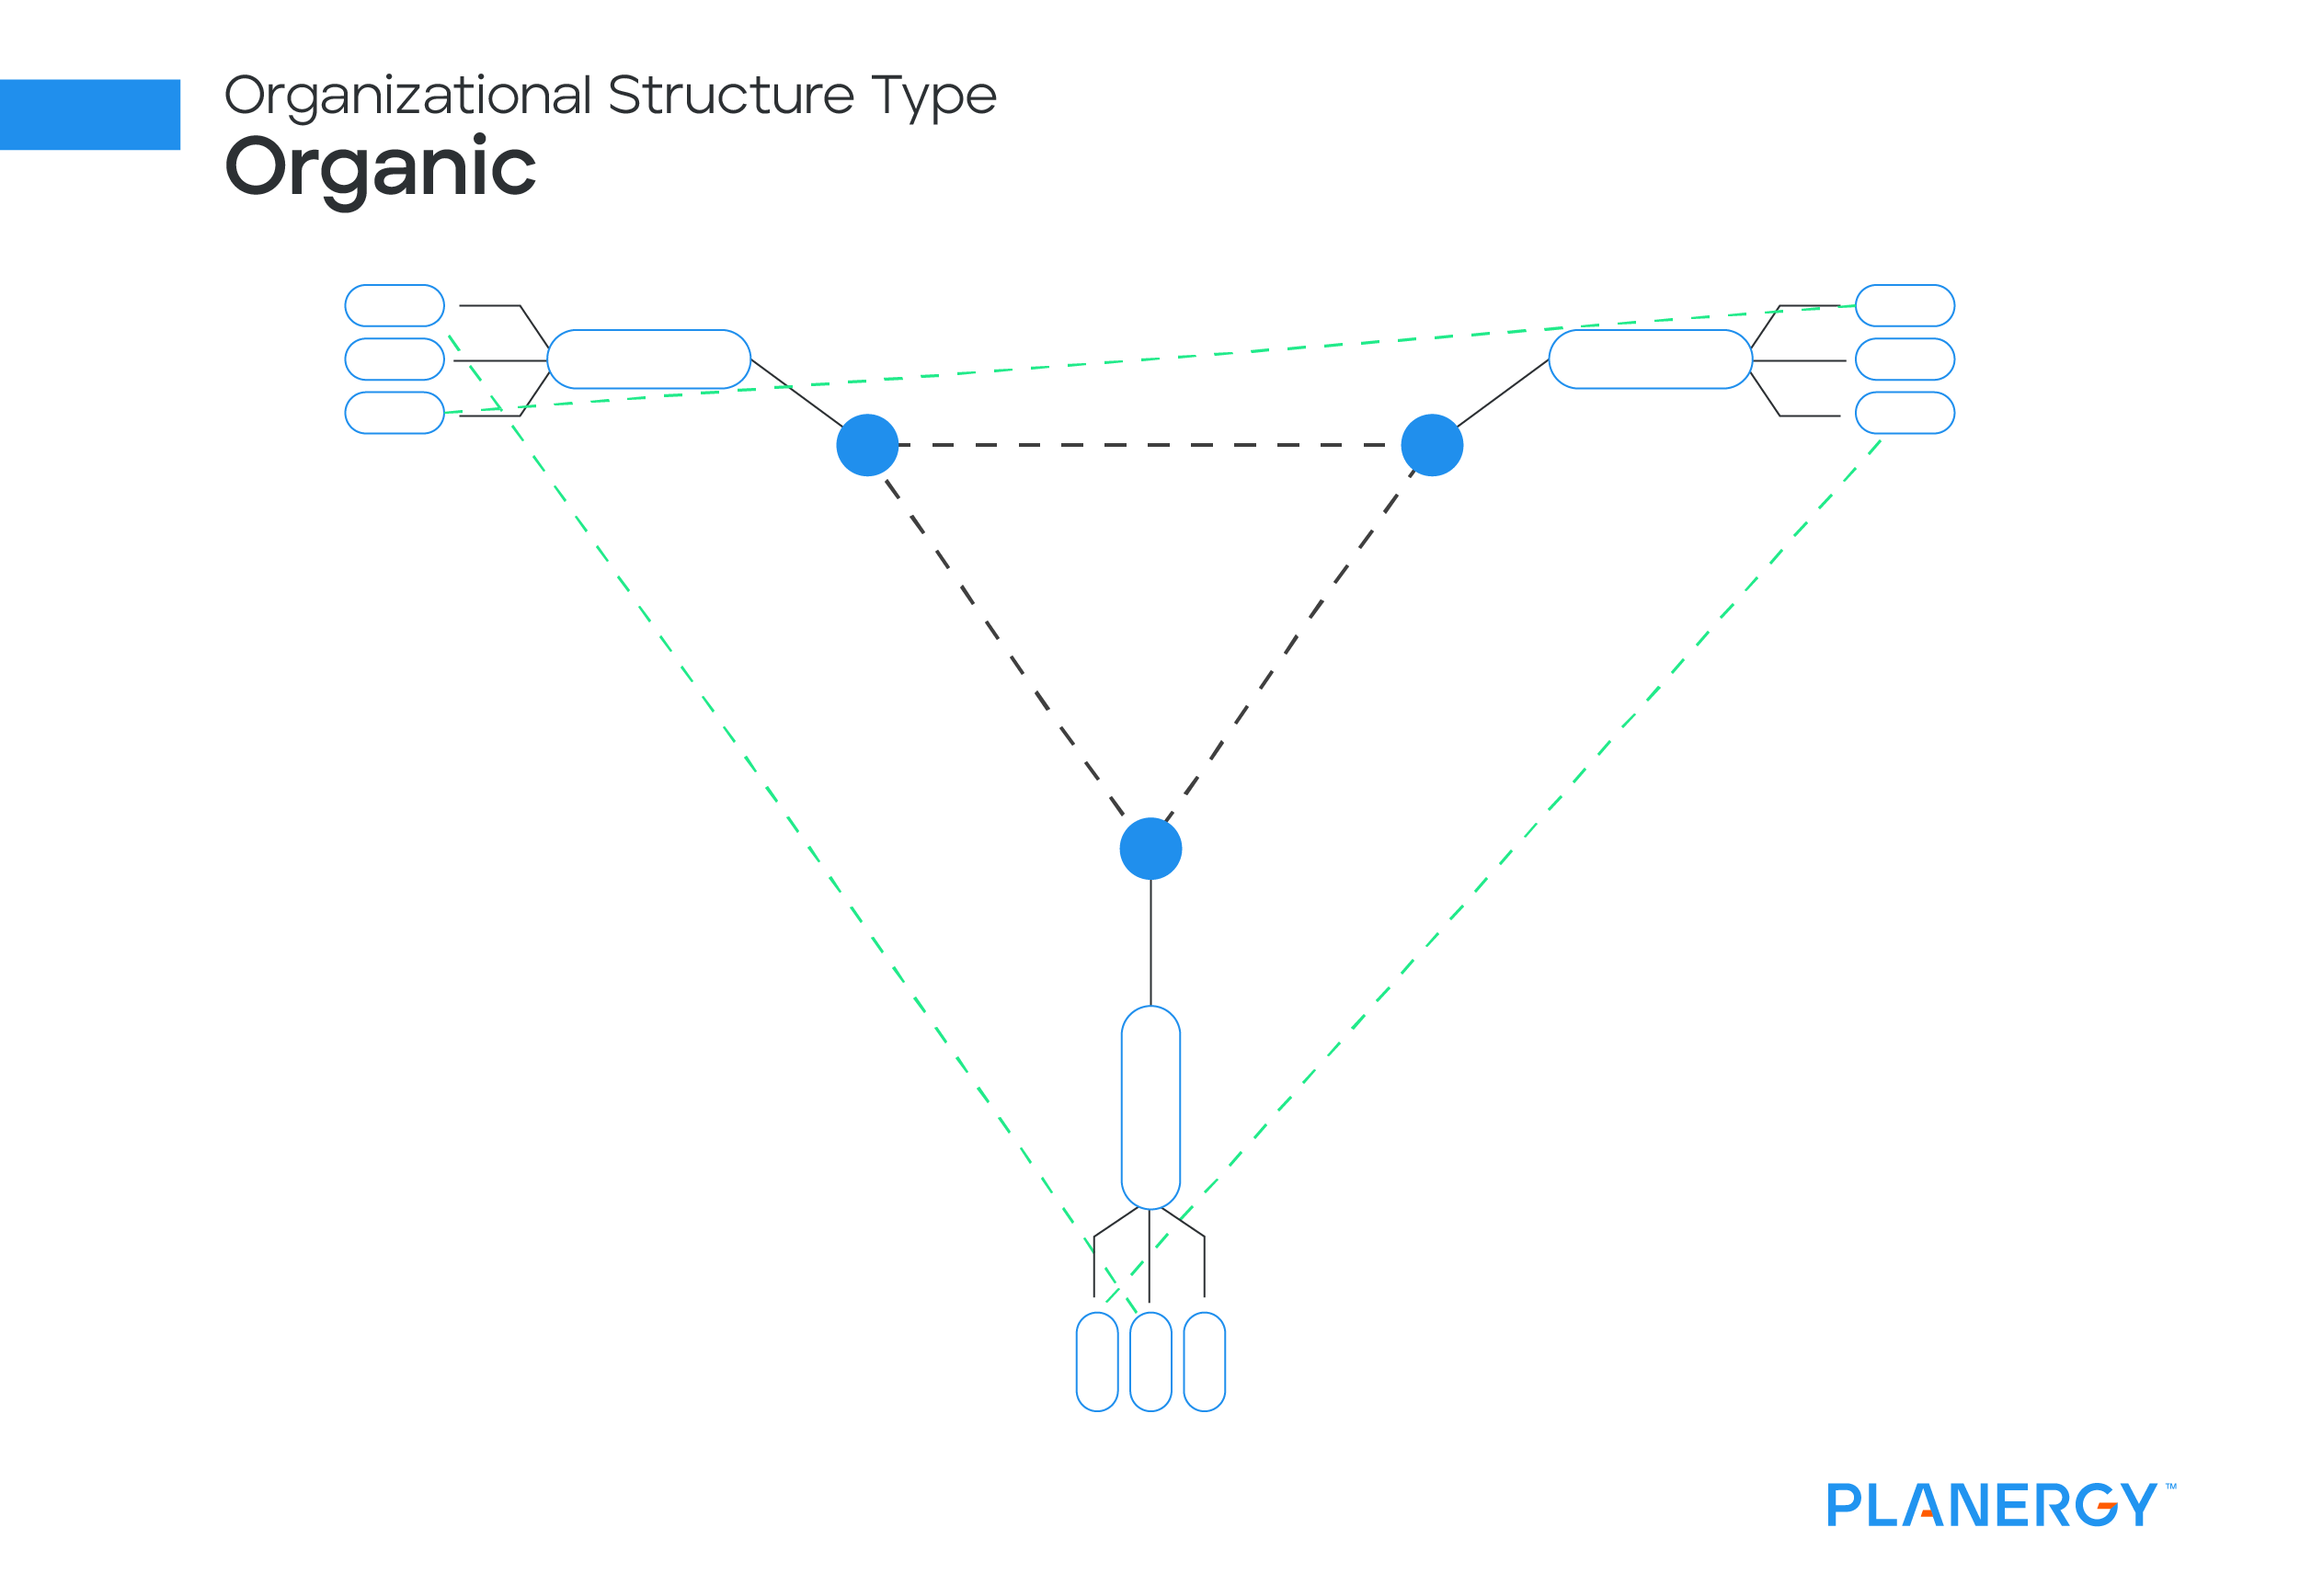 Organic organizational structure